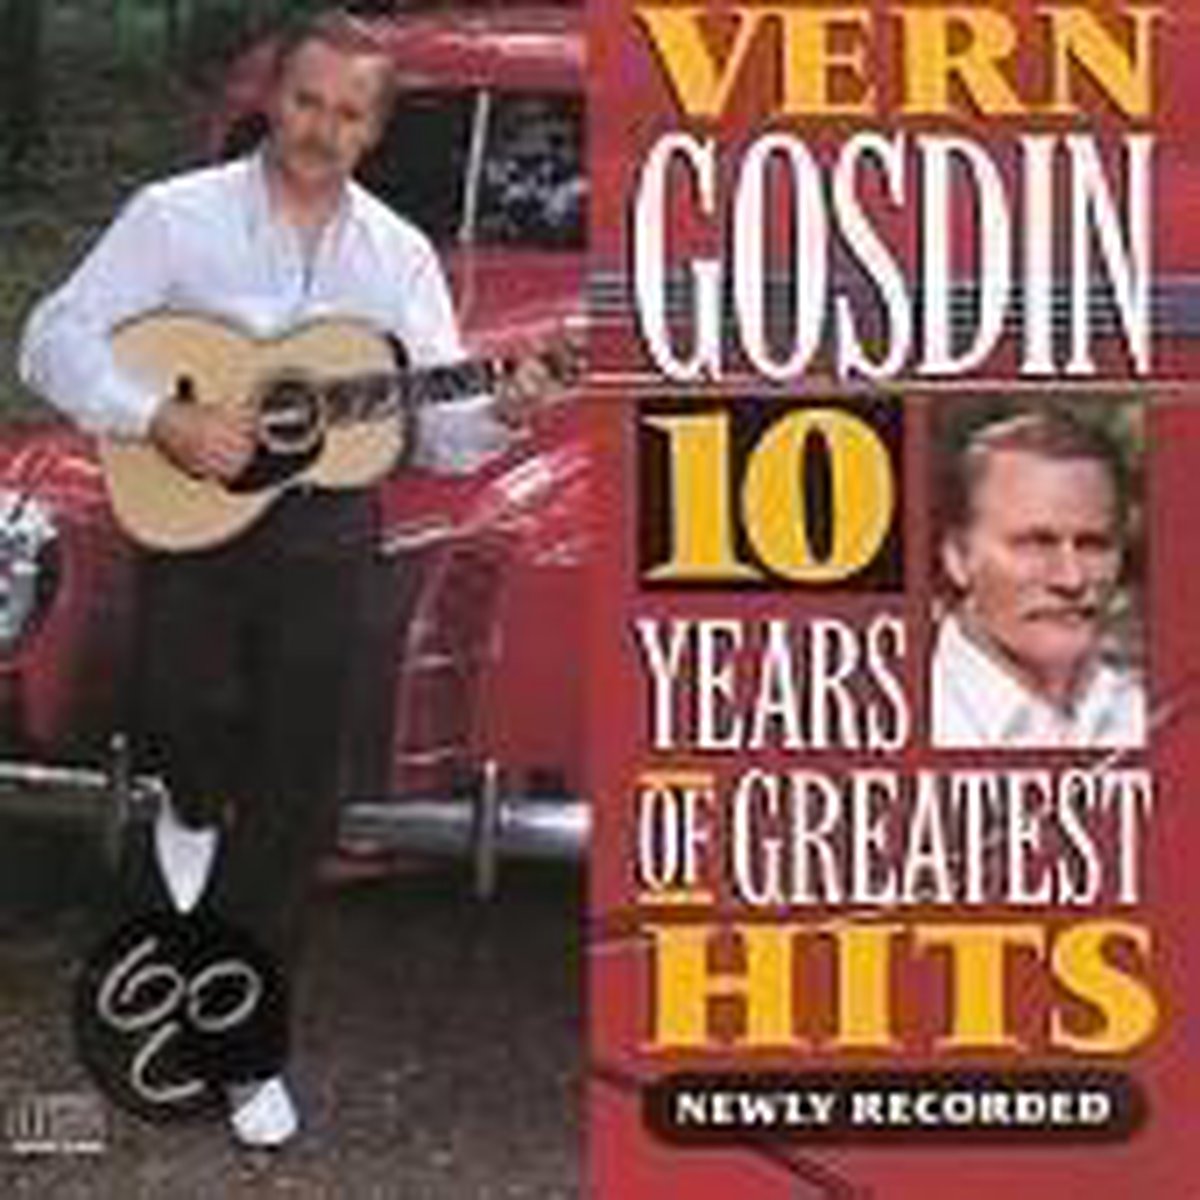 10 Years Of Greatest Hits - Vern Gosdin